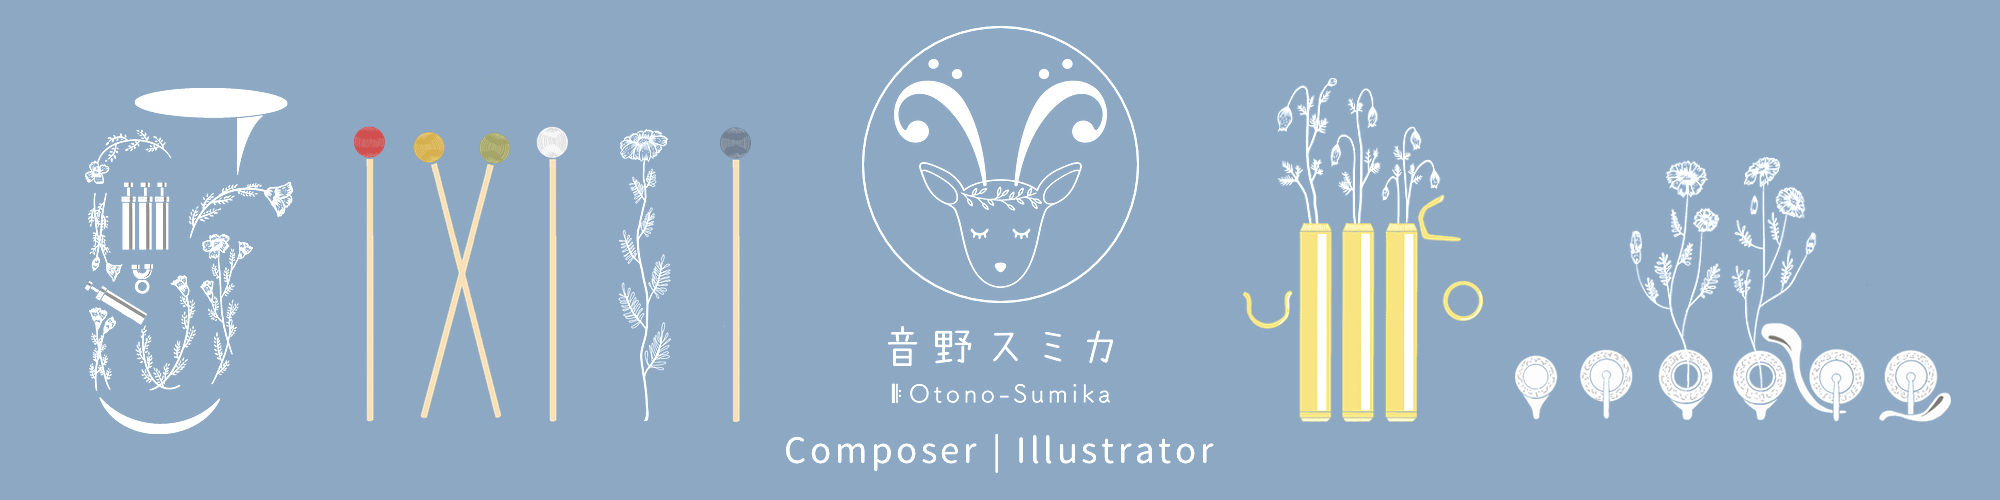 2nd CD [ 音ノ雨 ] Oto-no-Ame - Sumika Saxophone × ||:音野スミカ